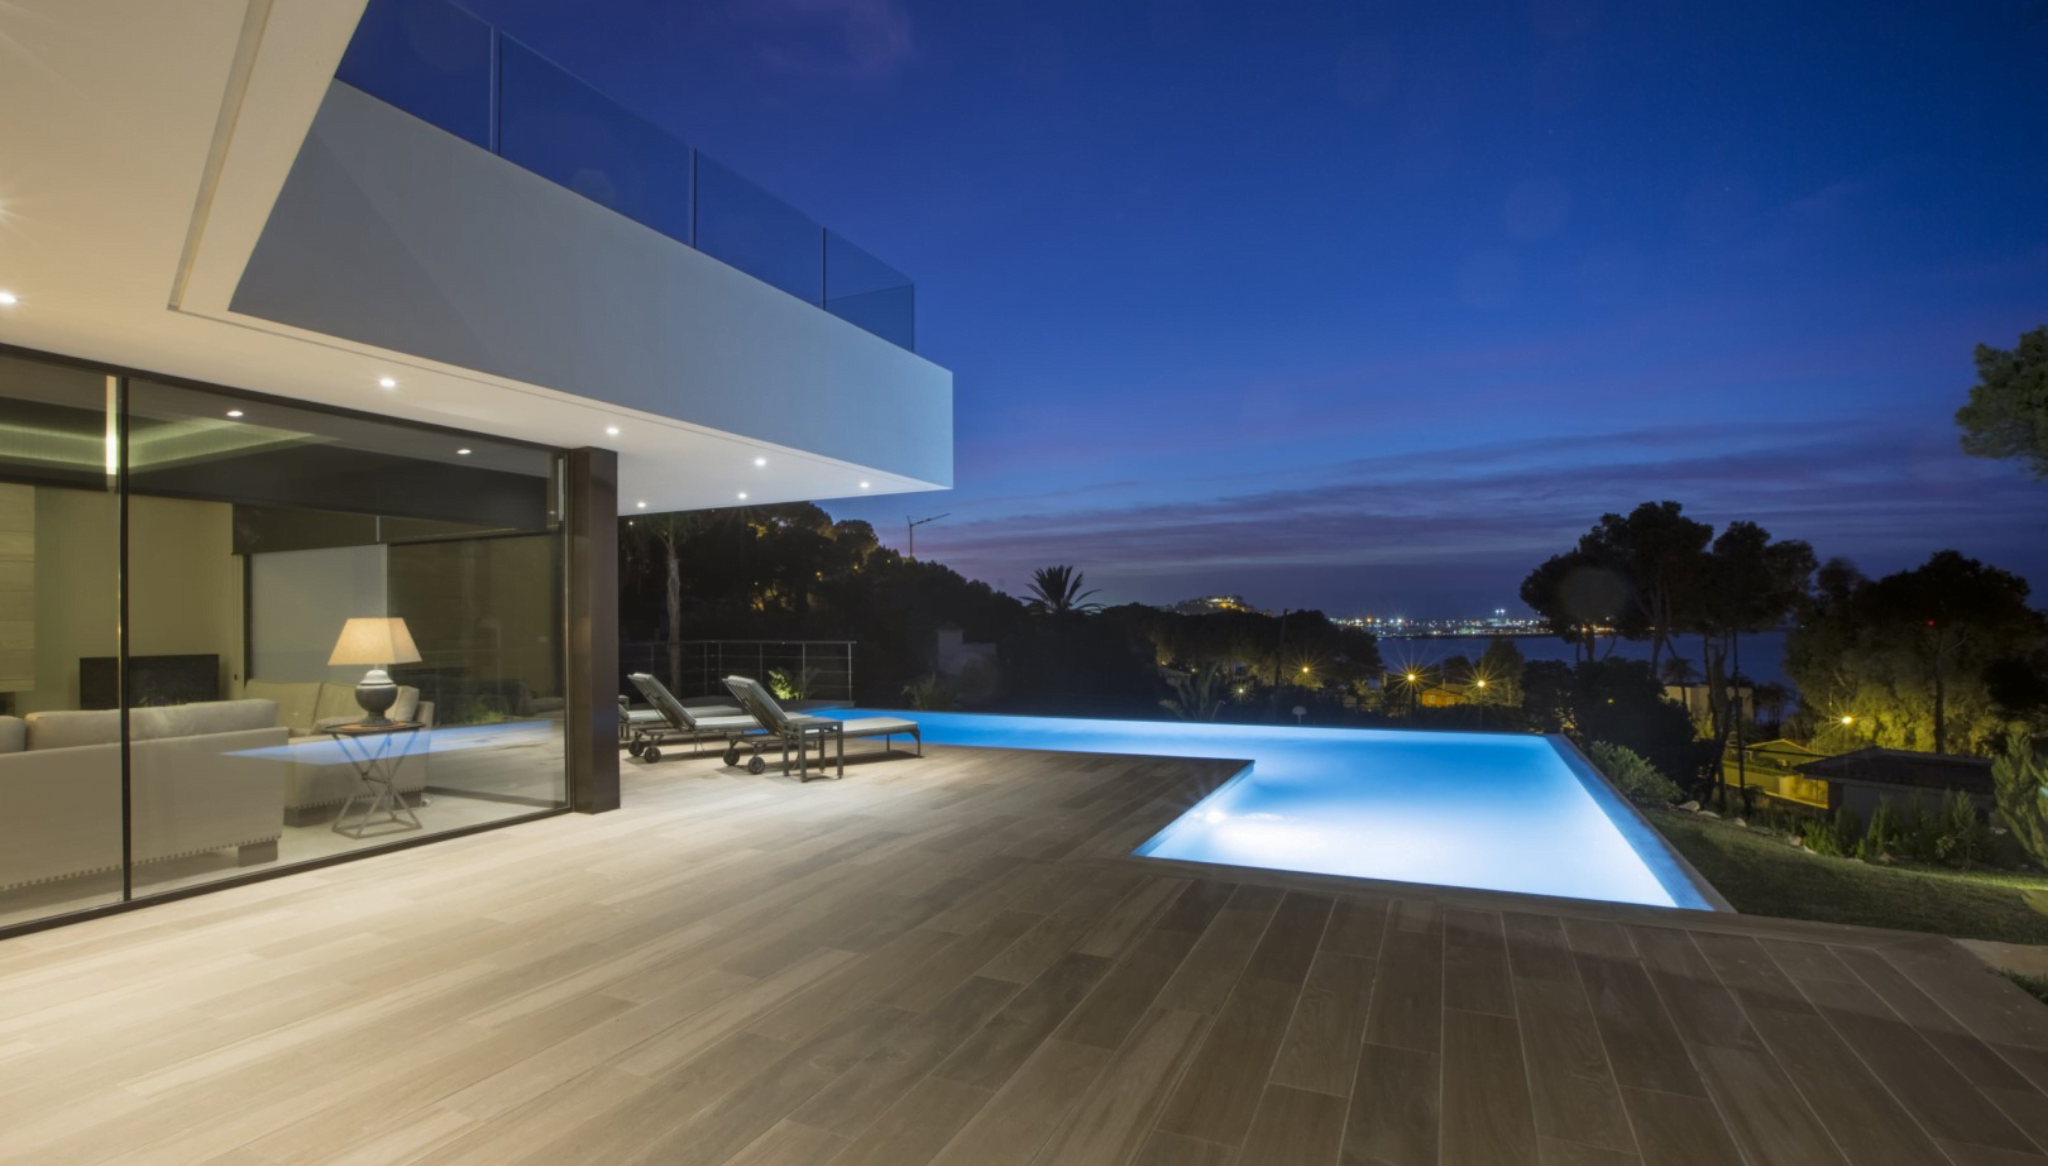 Terraza con piscina iluminada de noche – Urbimed Villas